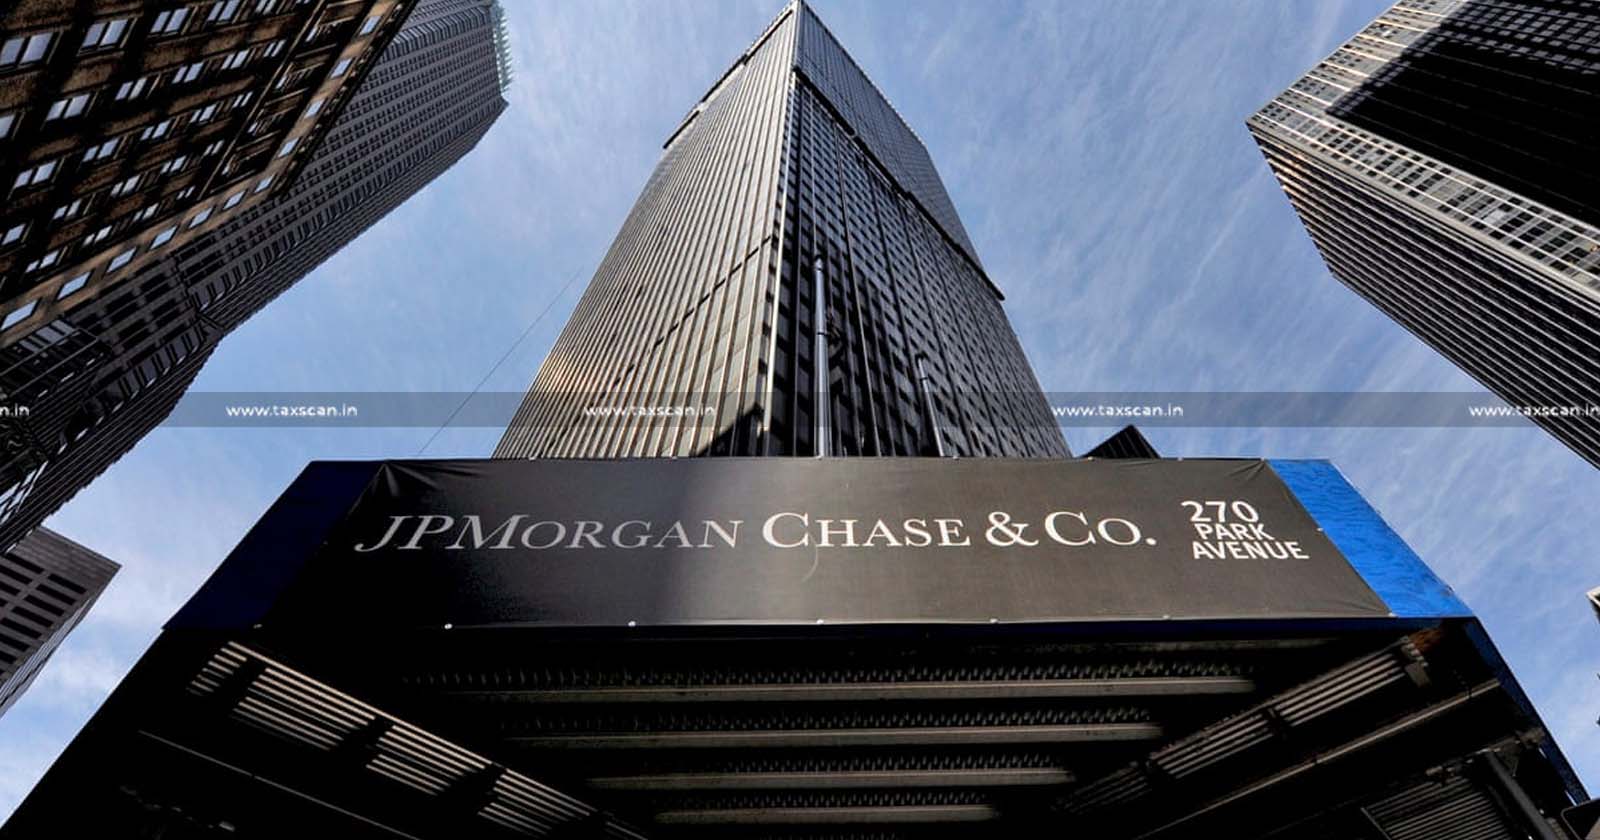 JPMorgan Chase & Co - job scan - job news - CA - MBA - TAXSCAN